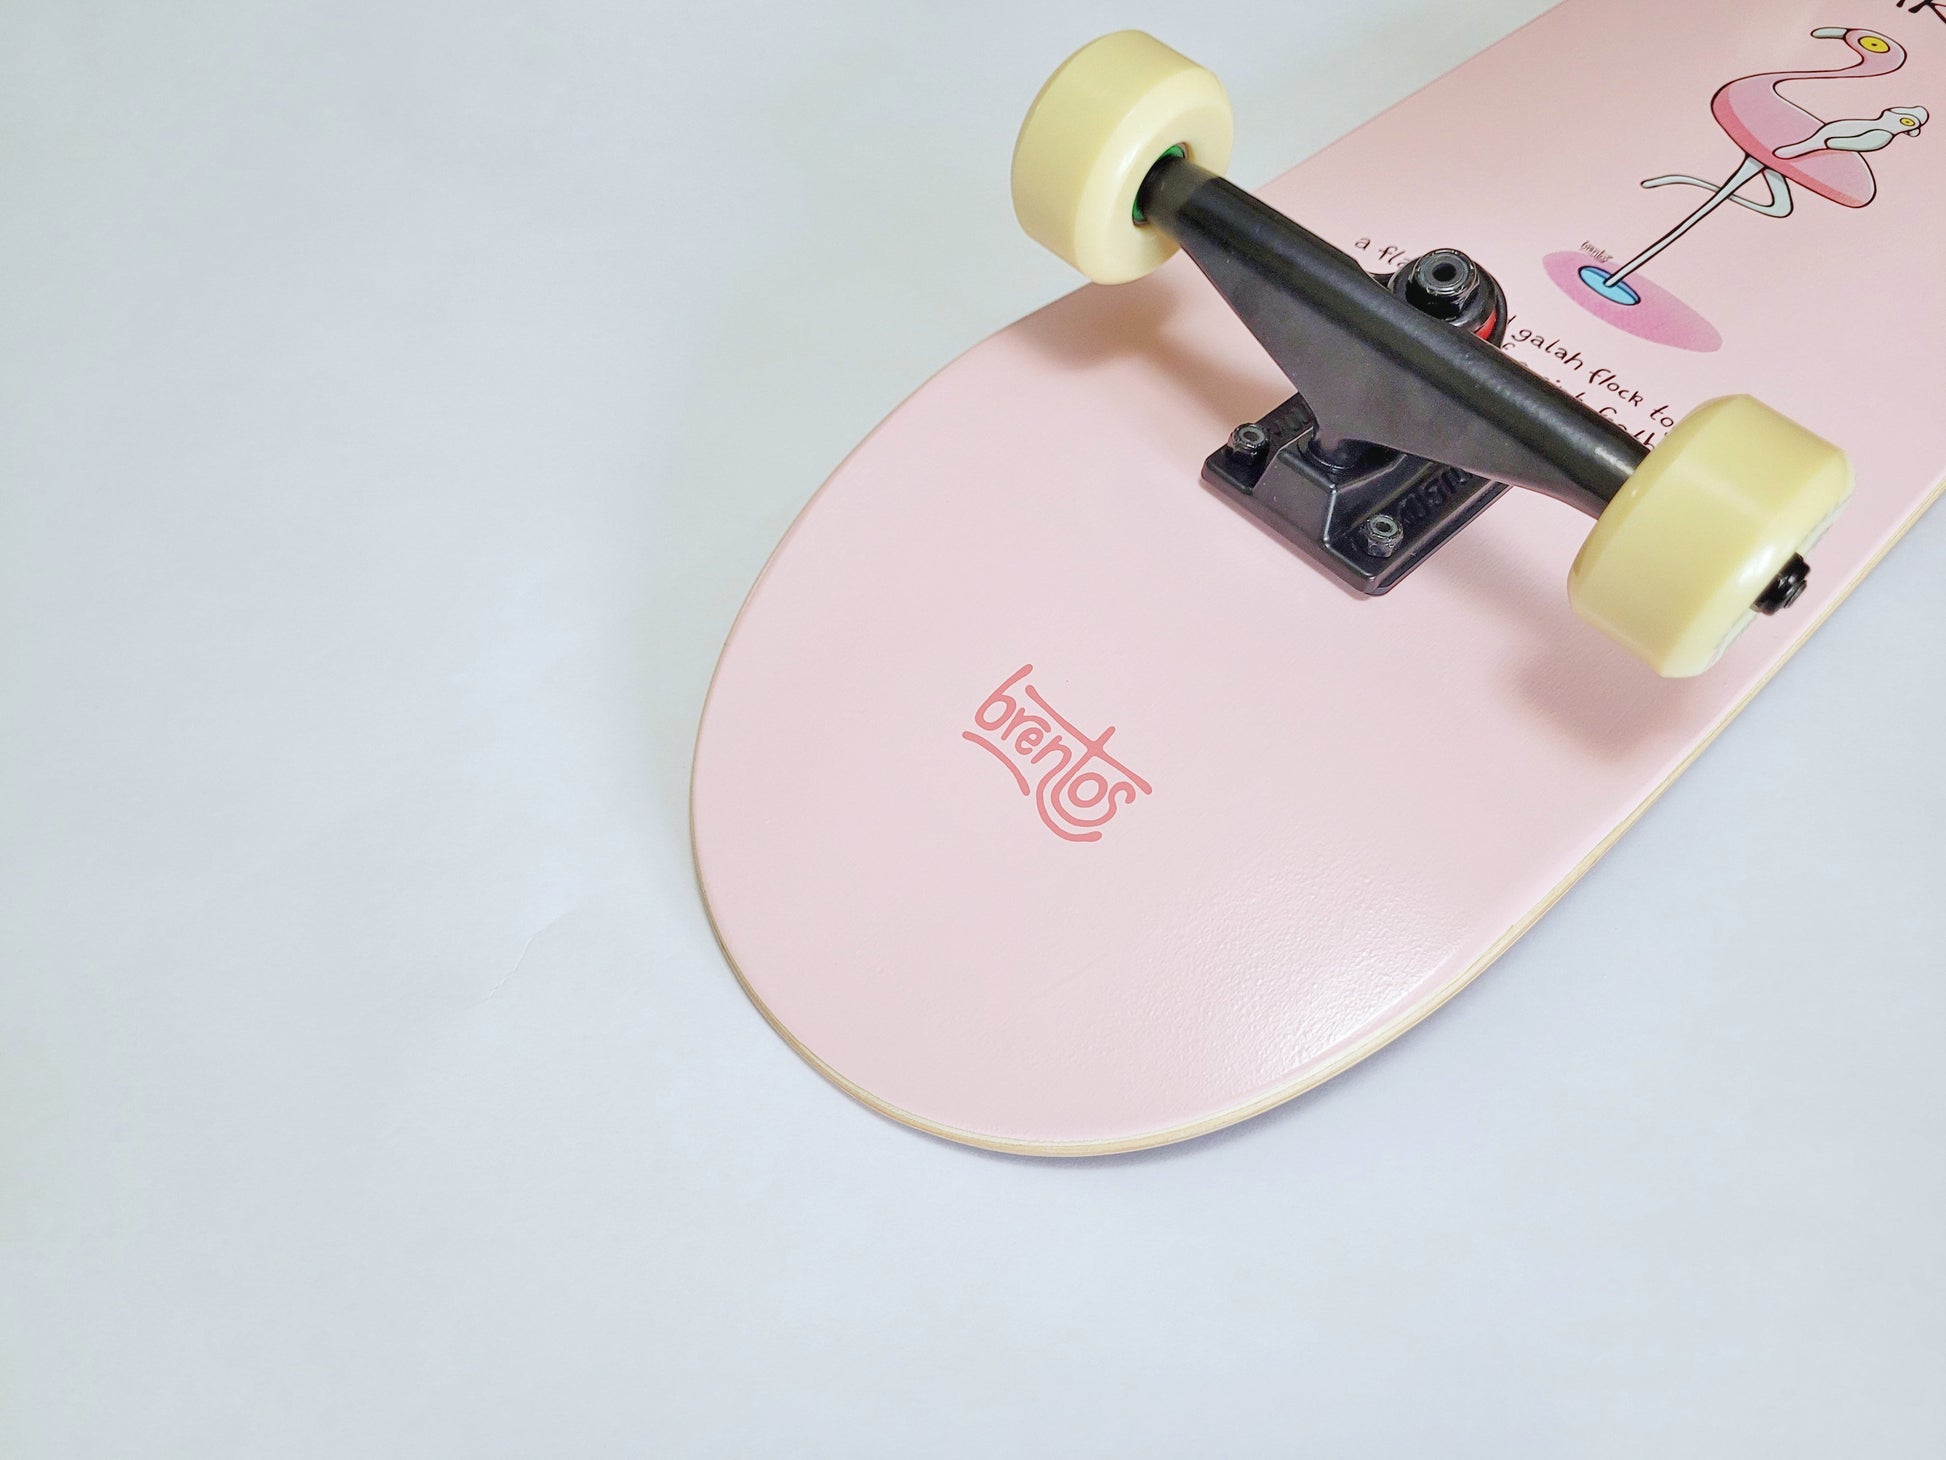 Sweetheart Flamingo Skateboard - SkatebruhSG